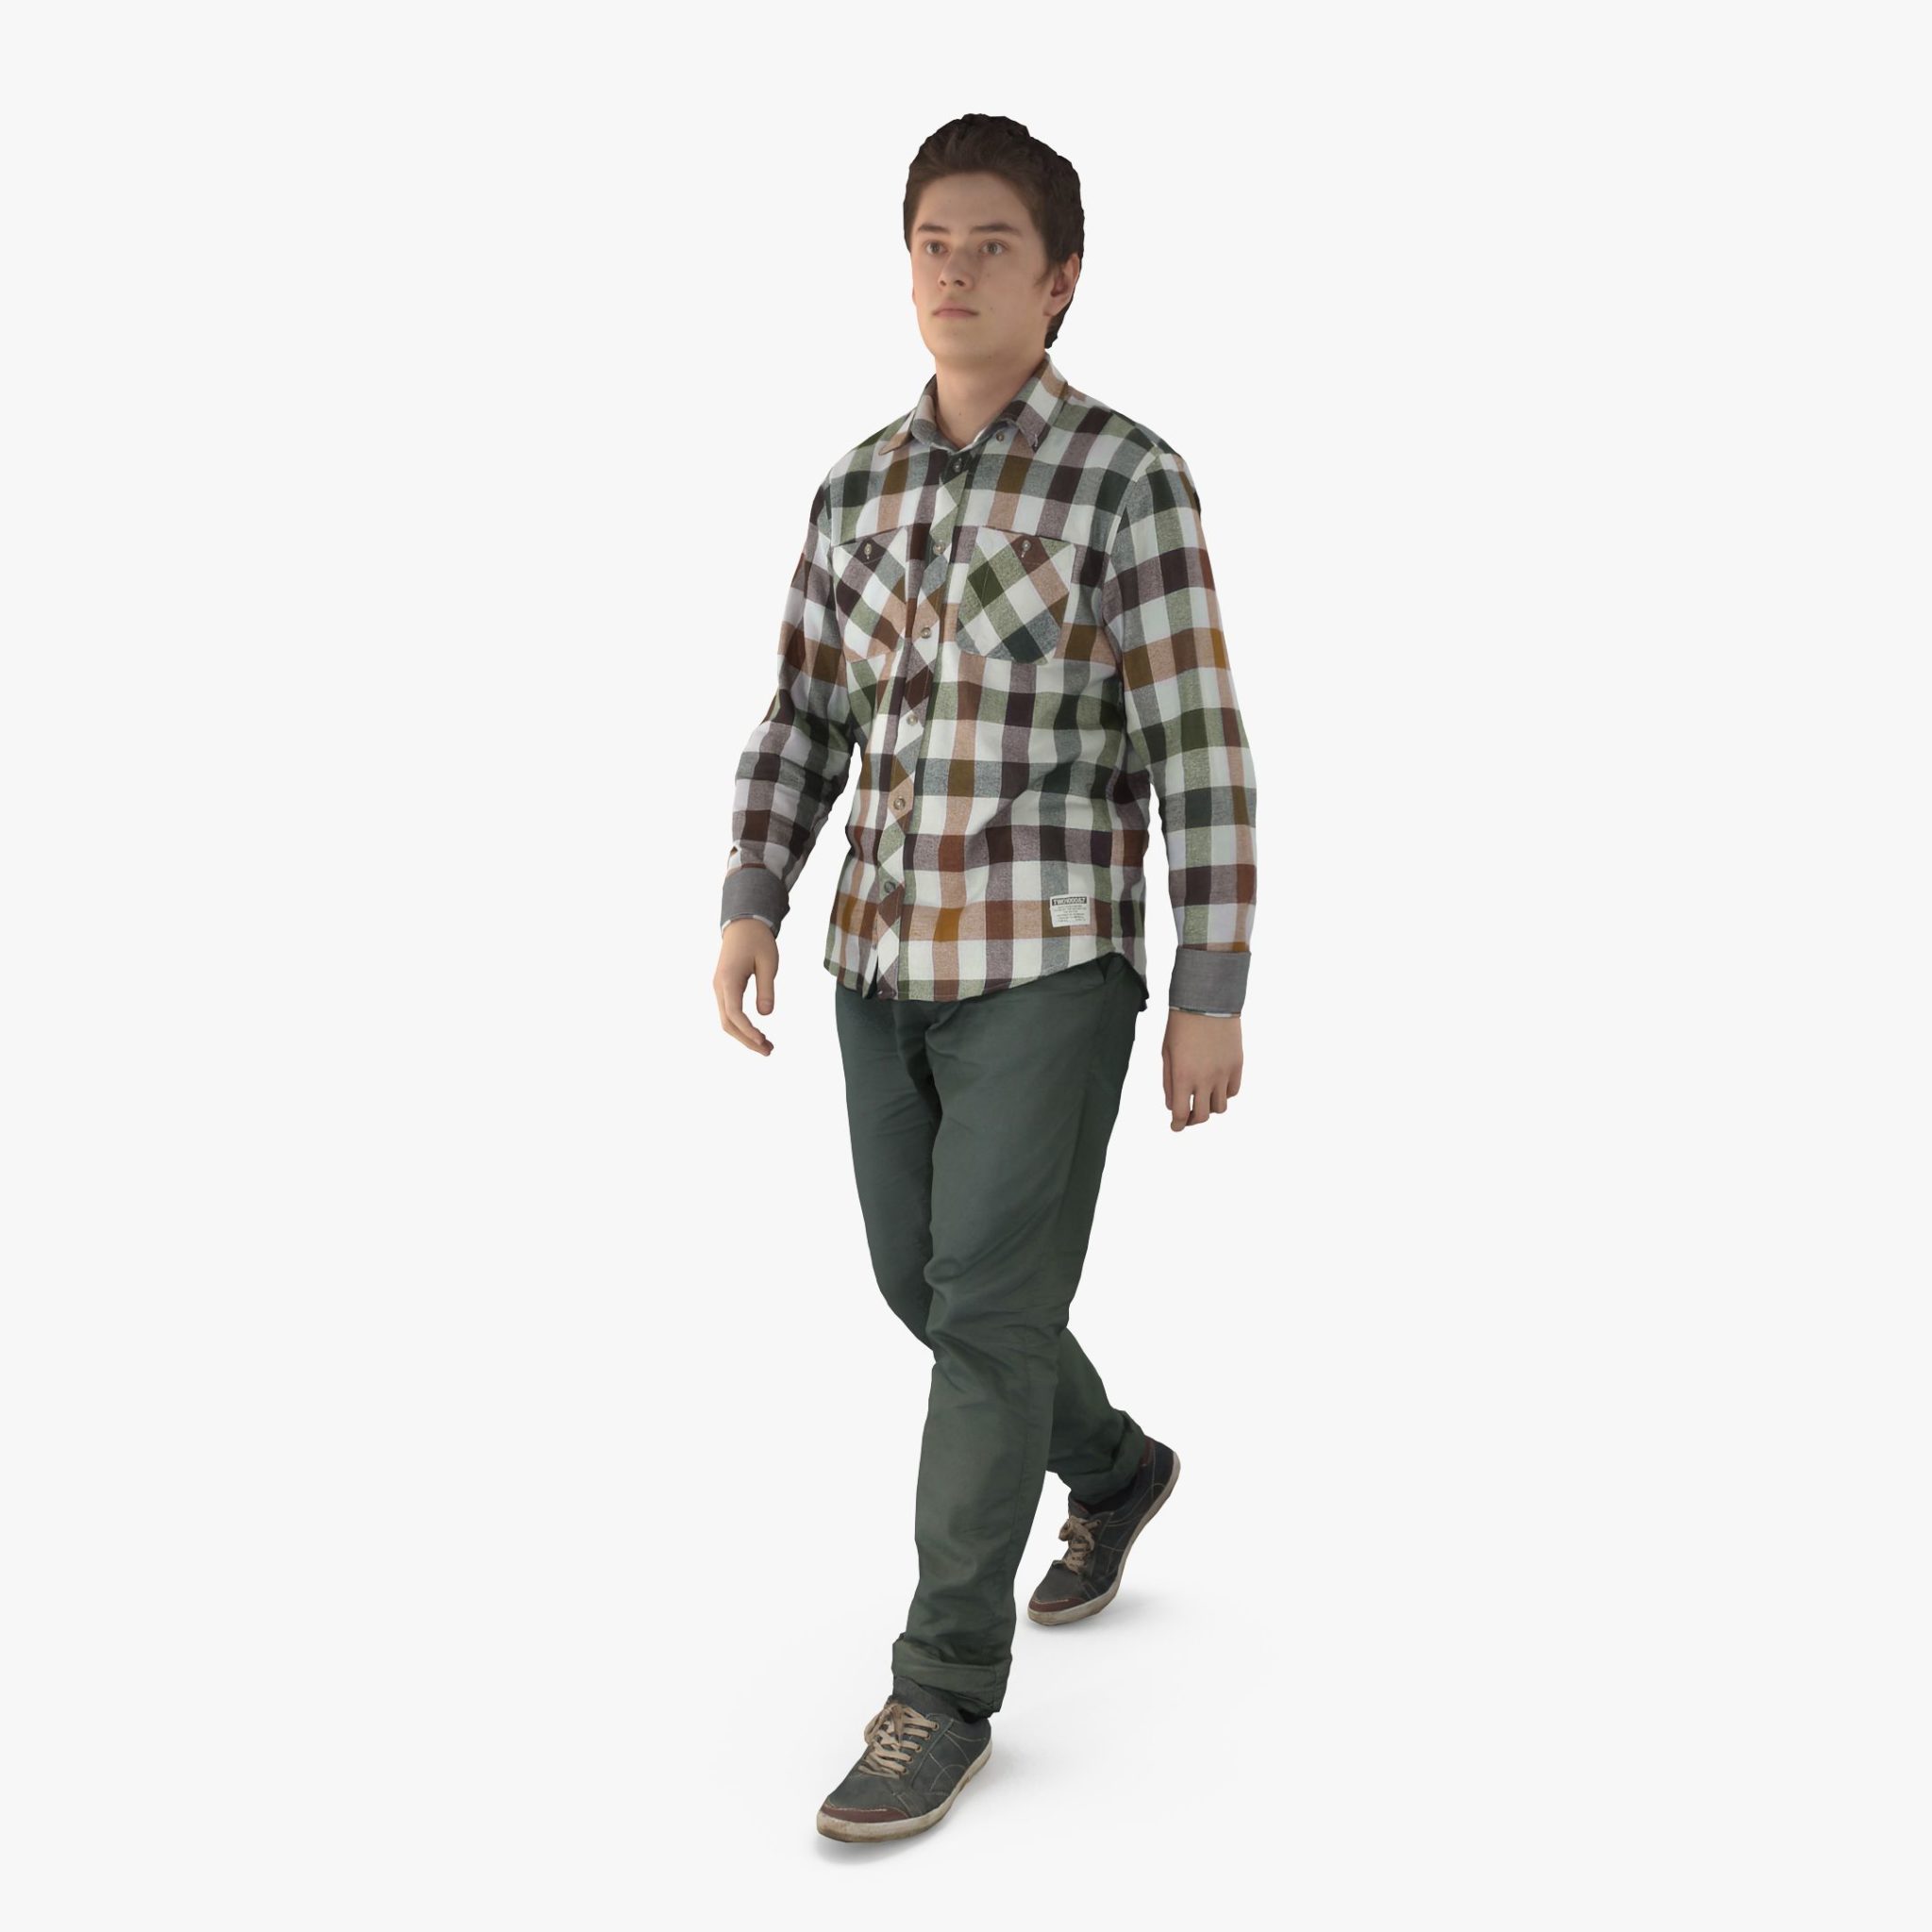 Urban Man Walking 3D Model | 3DTree Scanning Studio